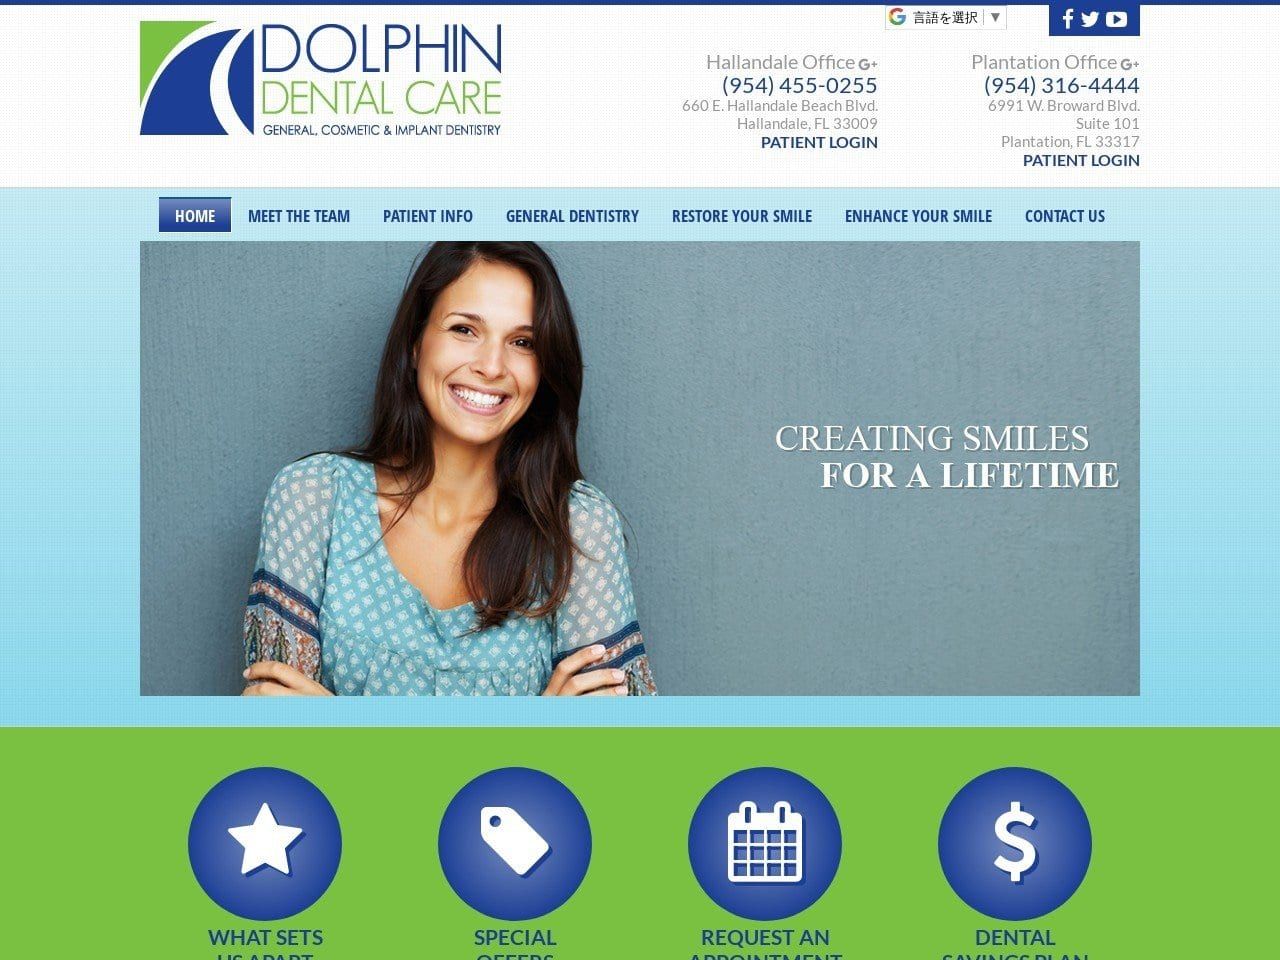 Dolphin Dental Care Website Screenshot from dolphindentalcare.com